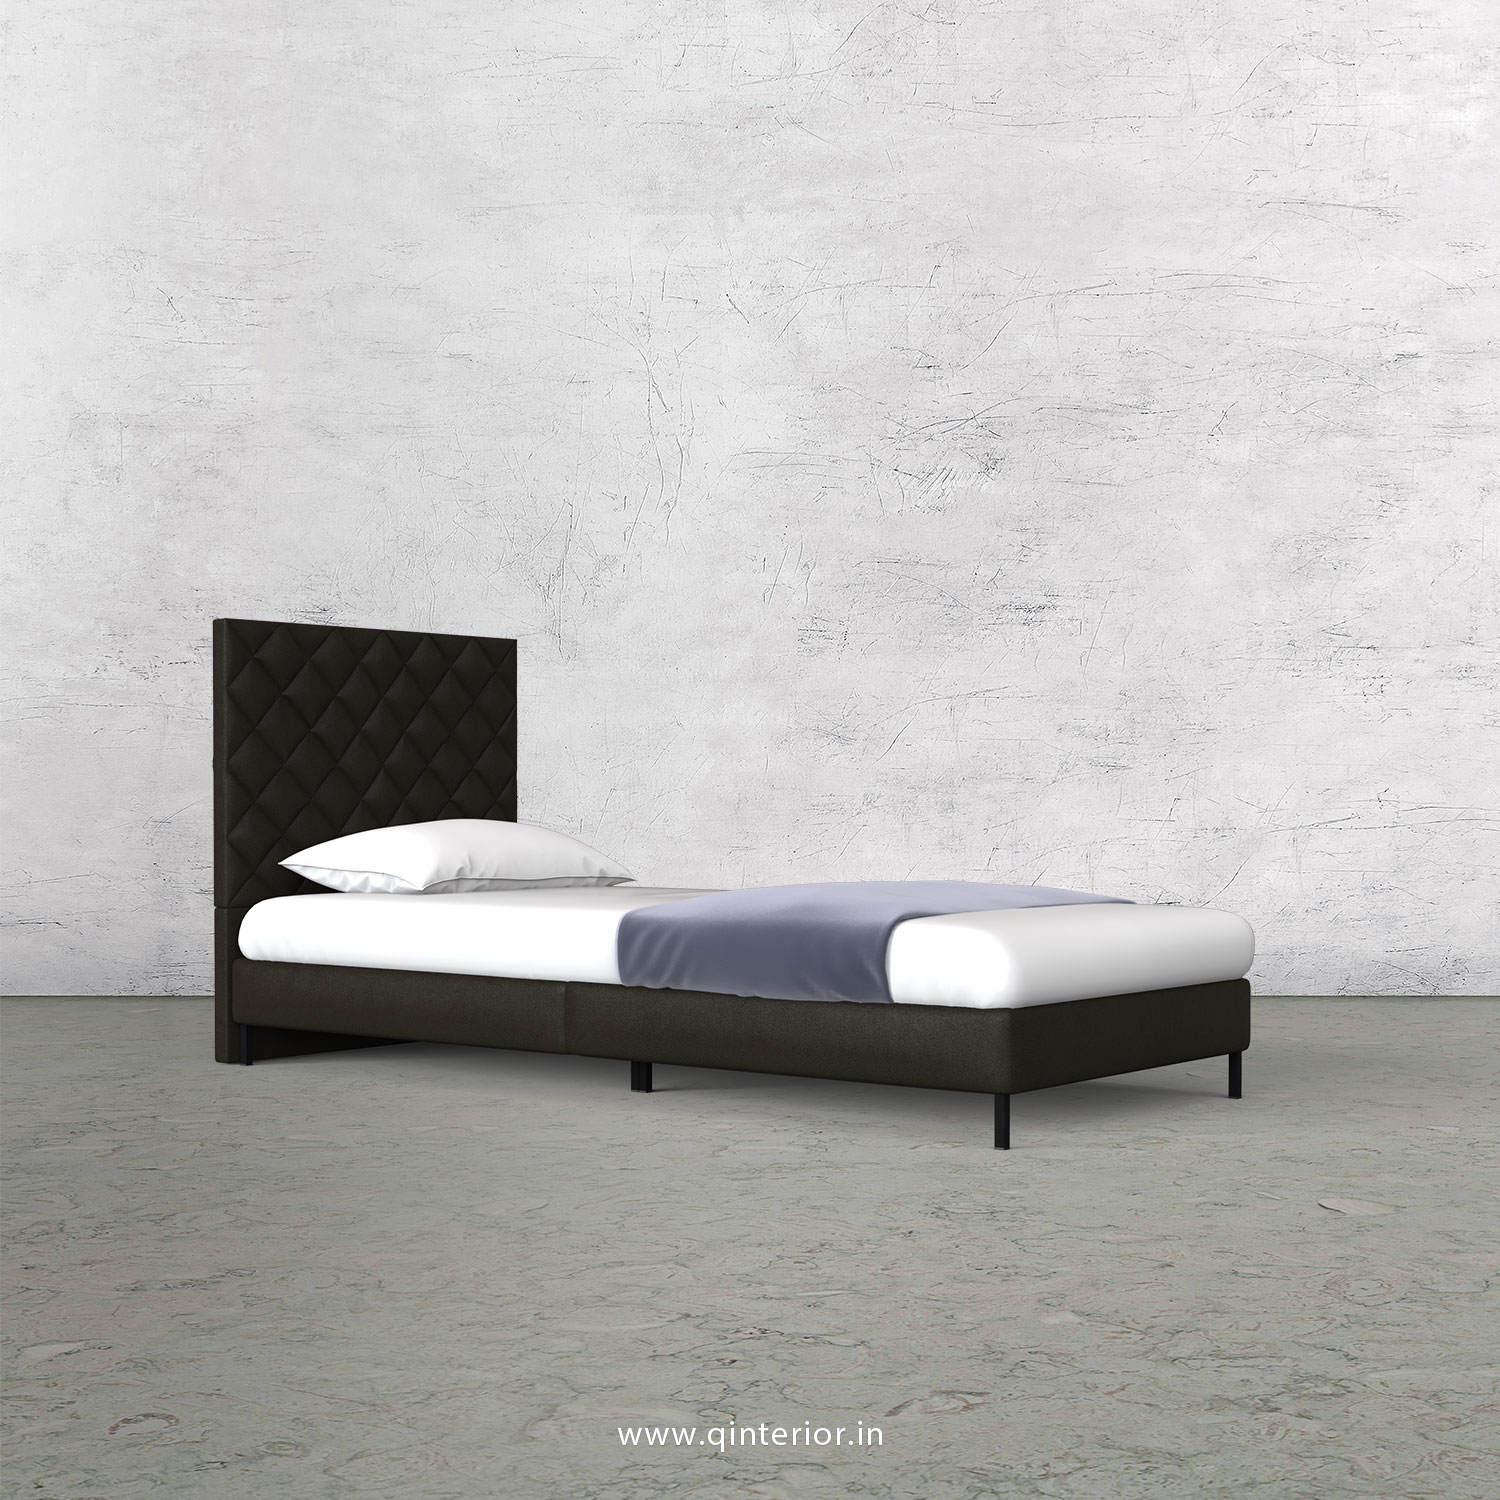 Aquila Single Bed in Fab Leather – SBD003 FL11